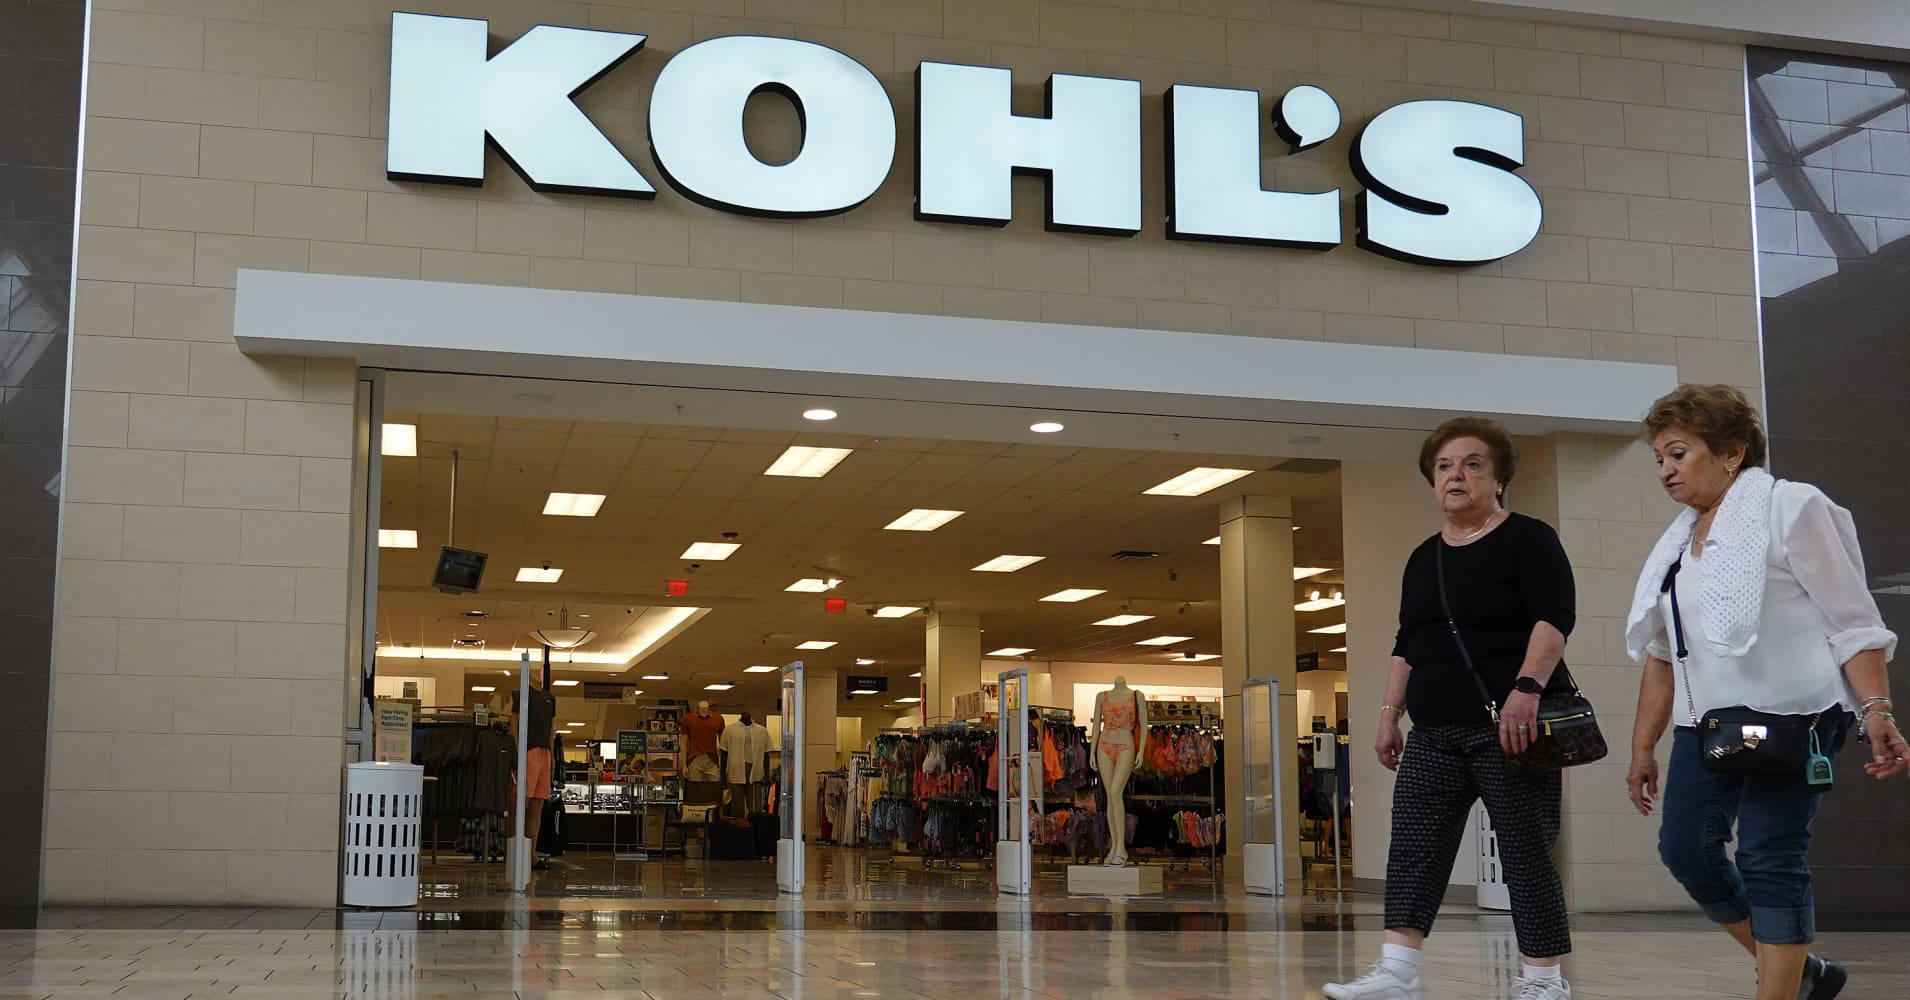 Kohl's shares jump as retailer reports a surprise profit